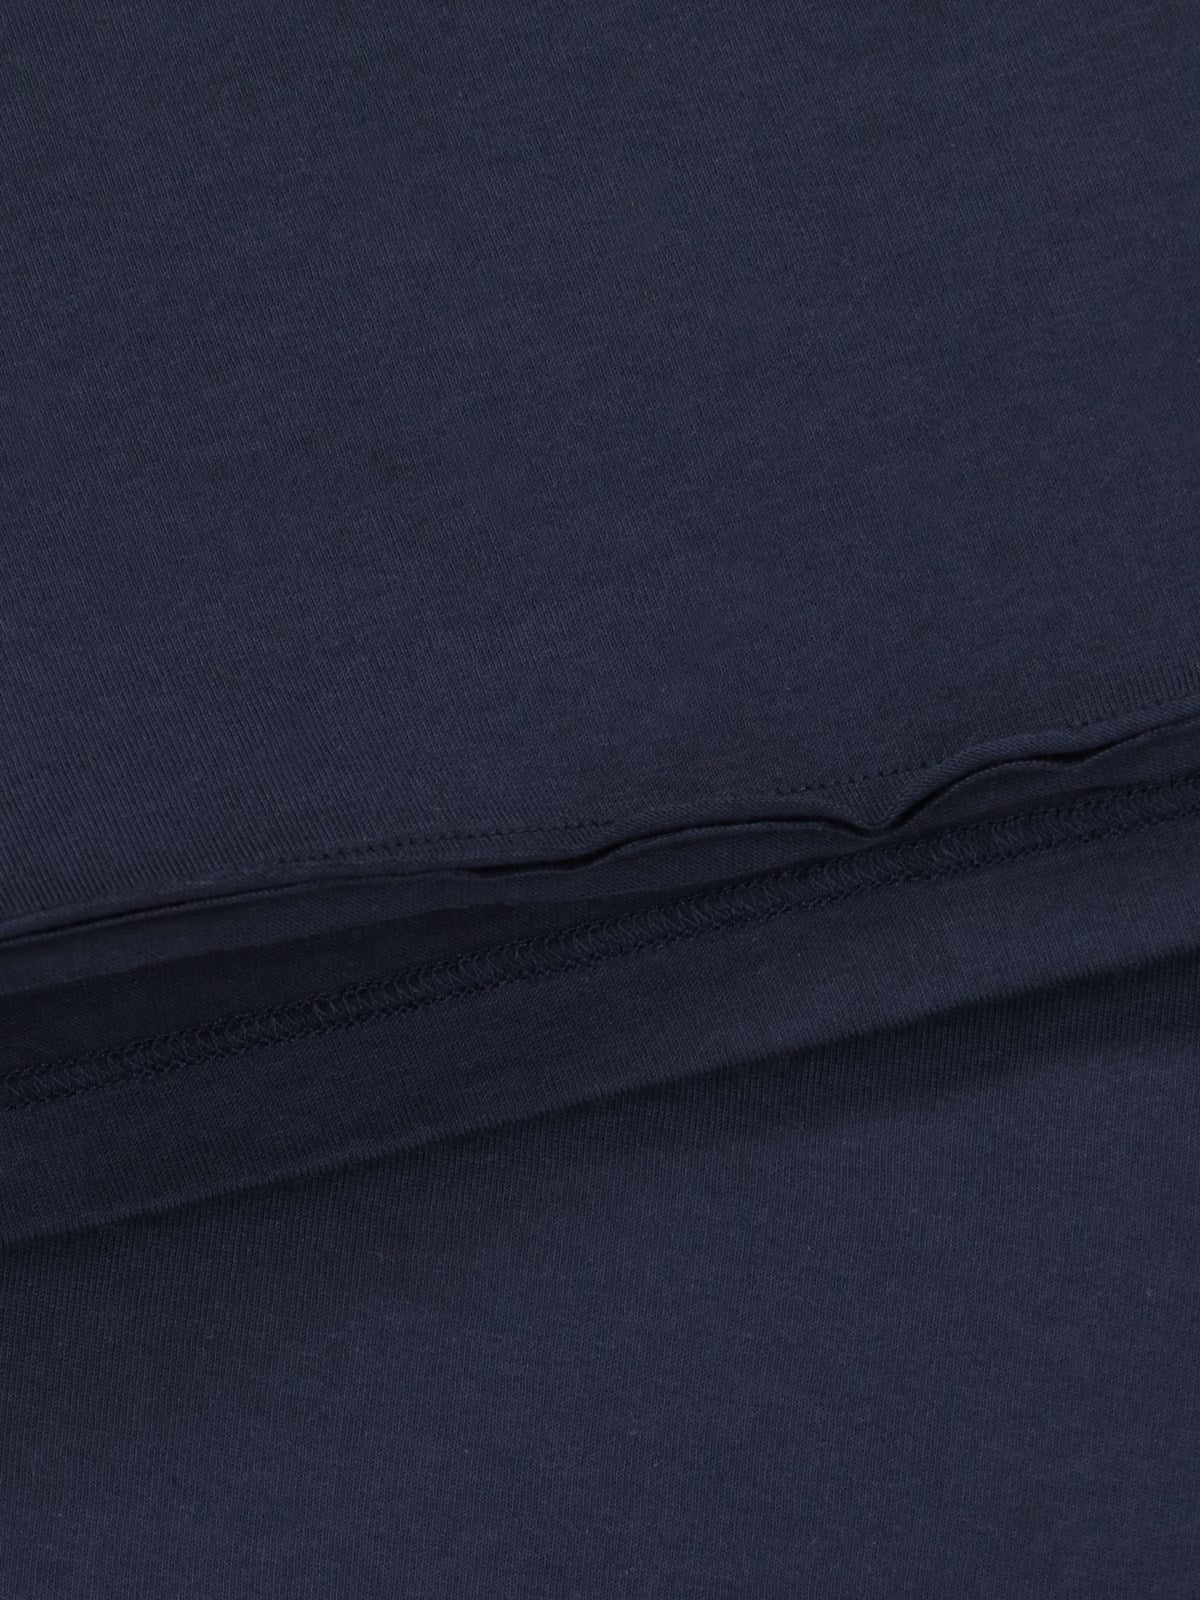 Saint Laurent T-Shirt logo-t-shirt-Saint Laurent-T-shirt logo Saint Laurent, in cotone blu, girocollo, maniche corte, stampa logo tono su tono fronte, orlo dritto.-Dresso